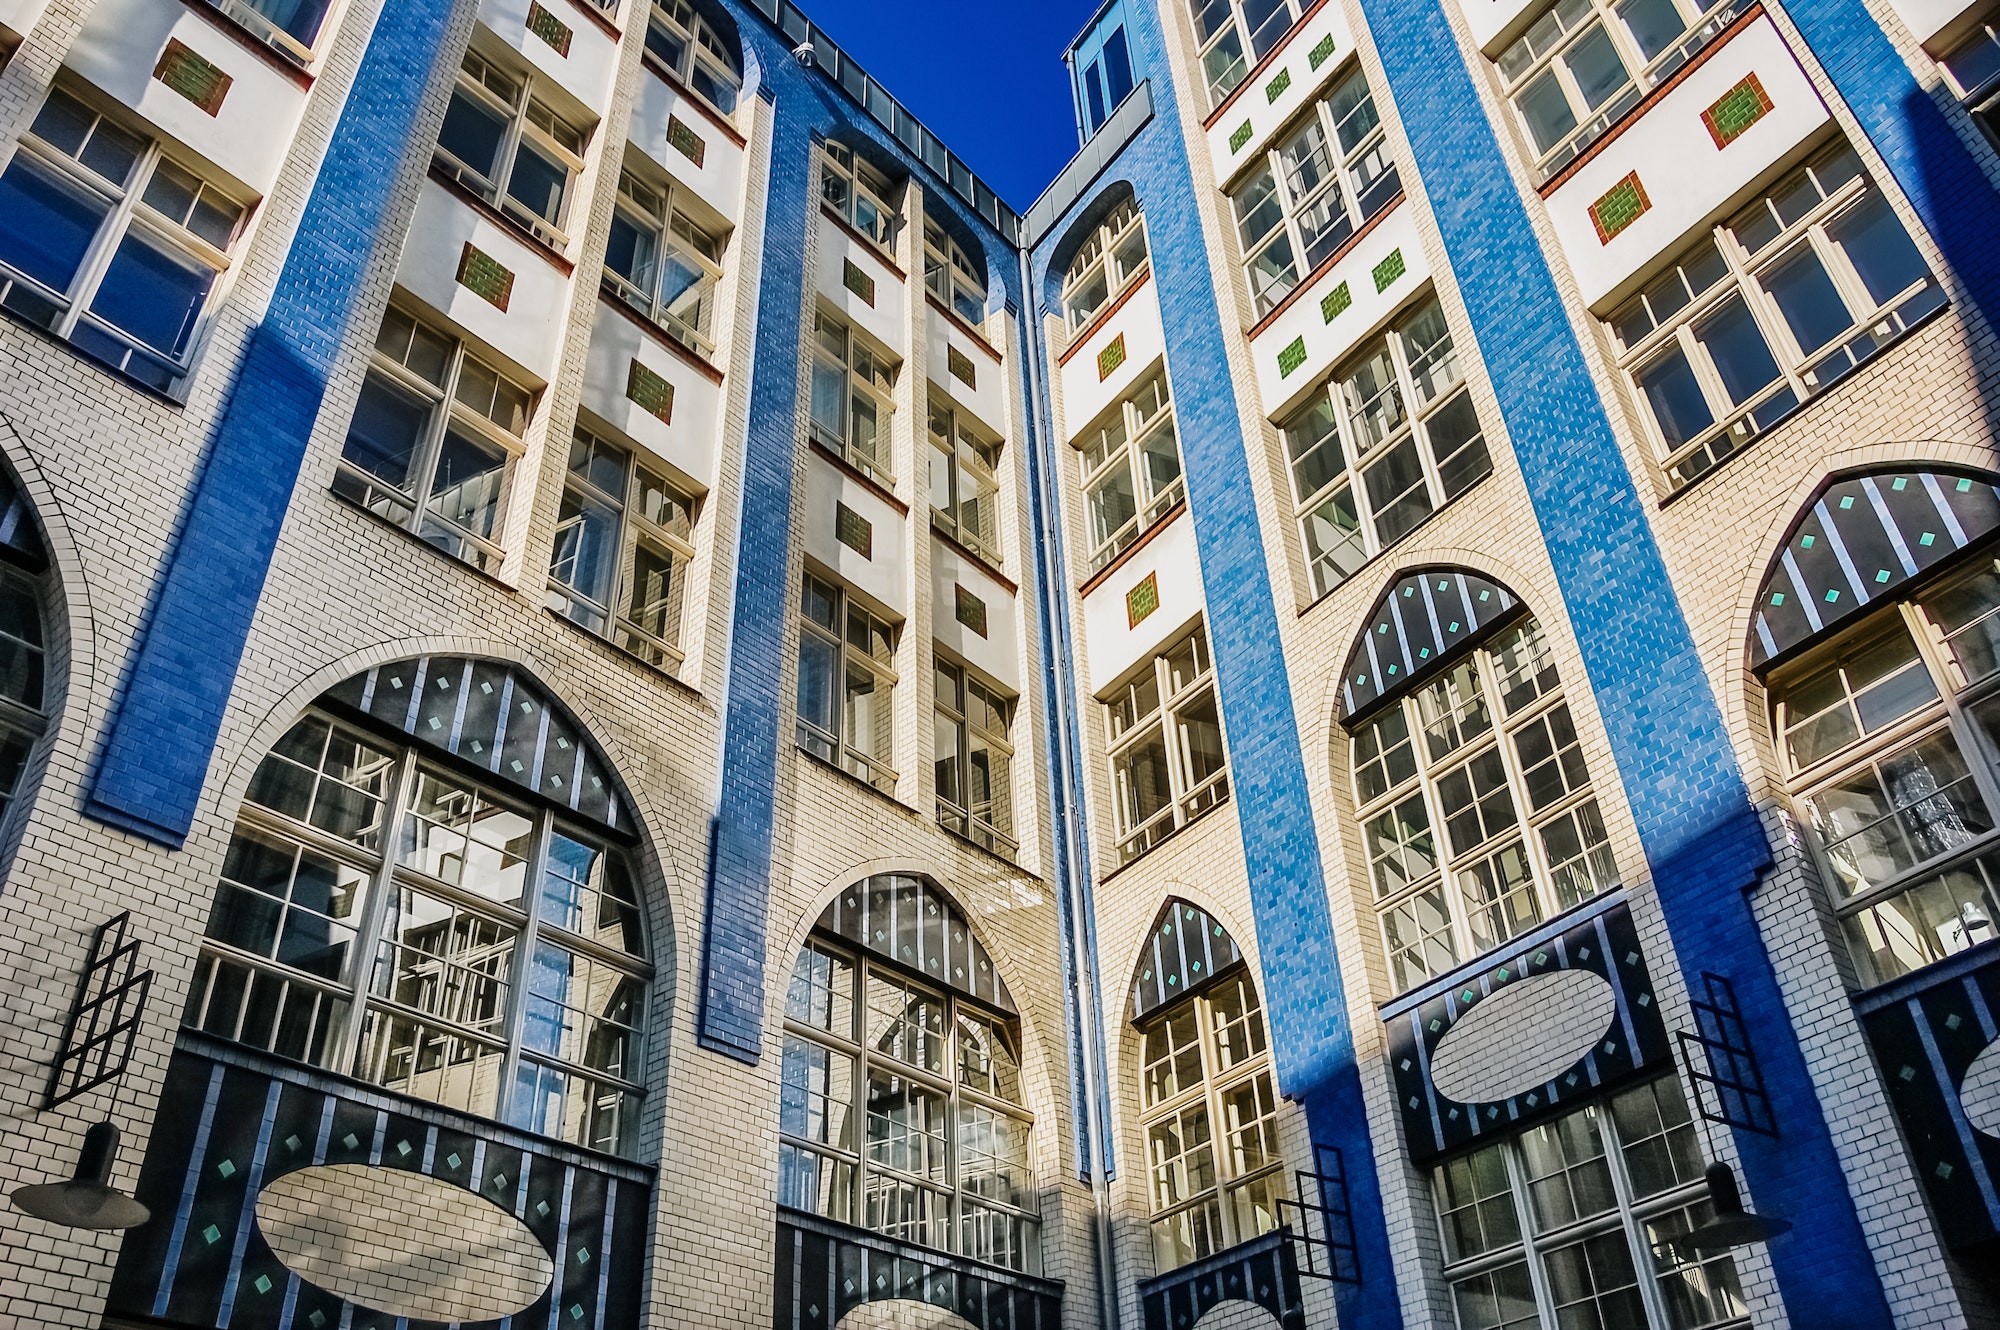 Berlin, Germany - June 7, 2019: Modern building in a Berlin neighborhood, of white and blue bricks.